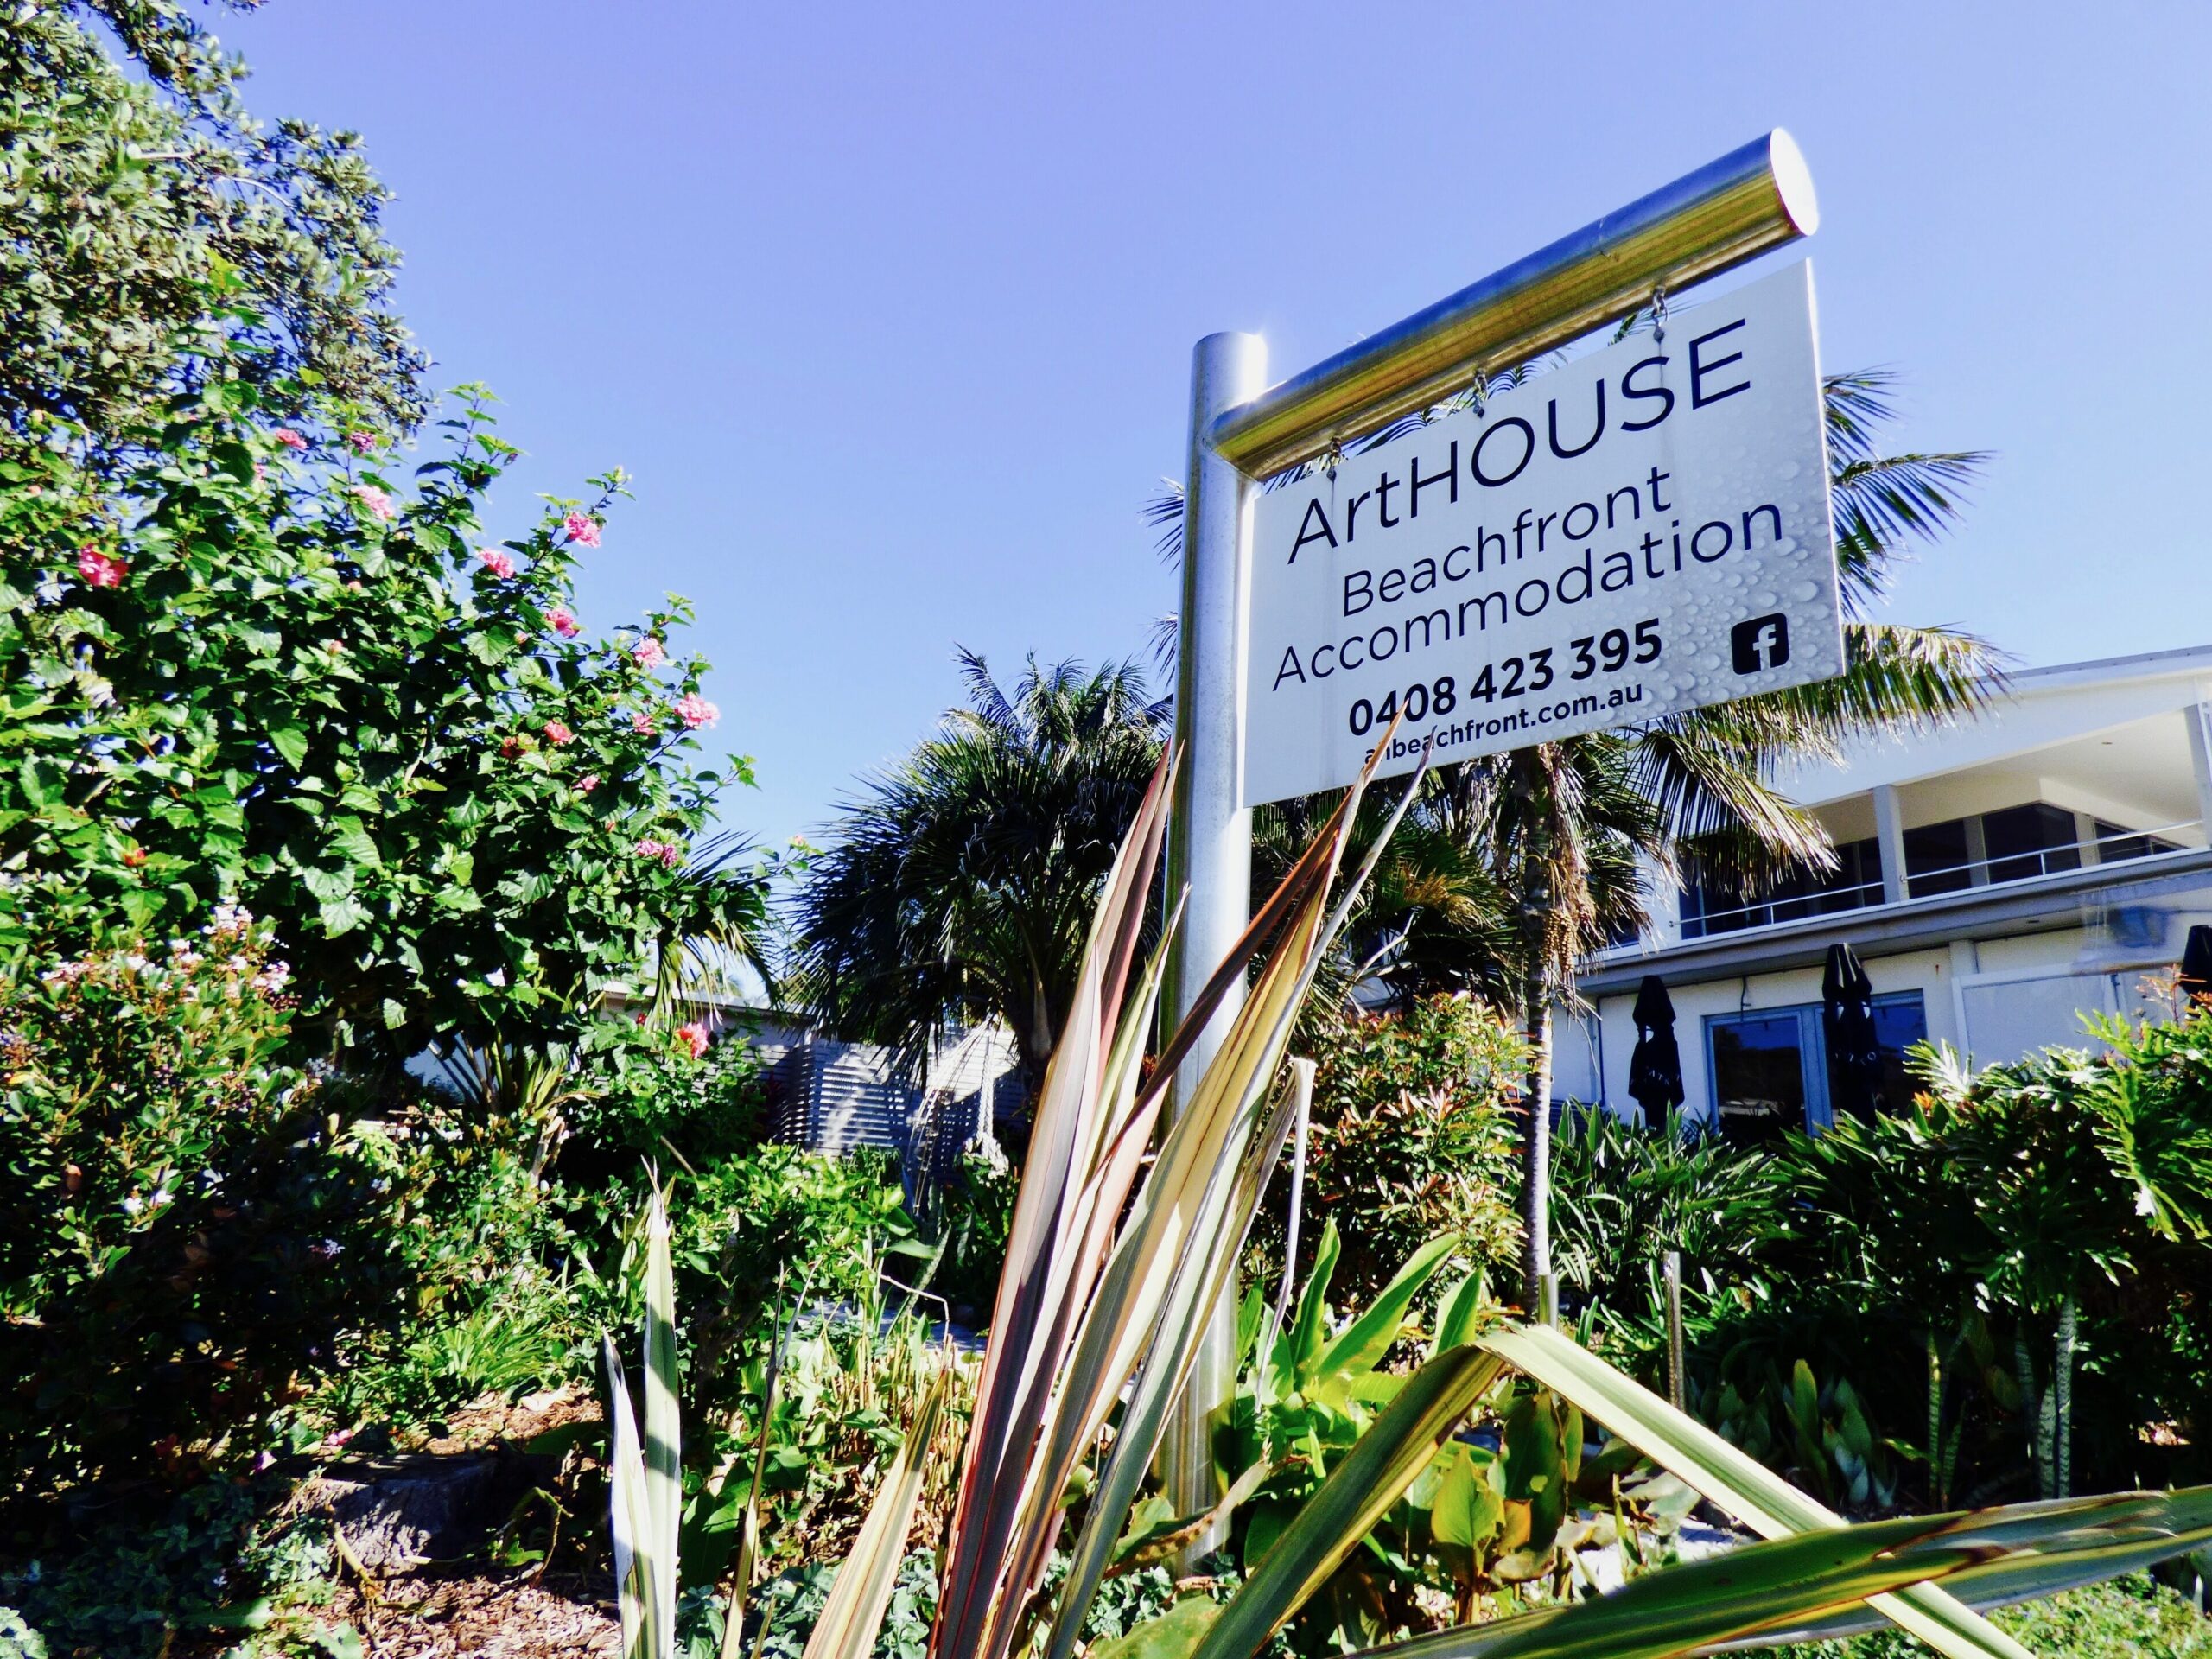 Arthouse Beachfront Accommodation